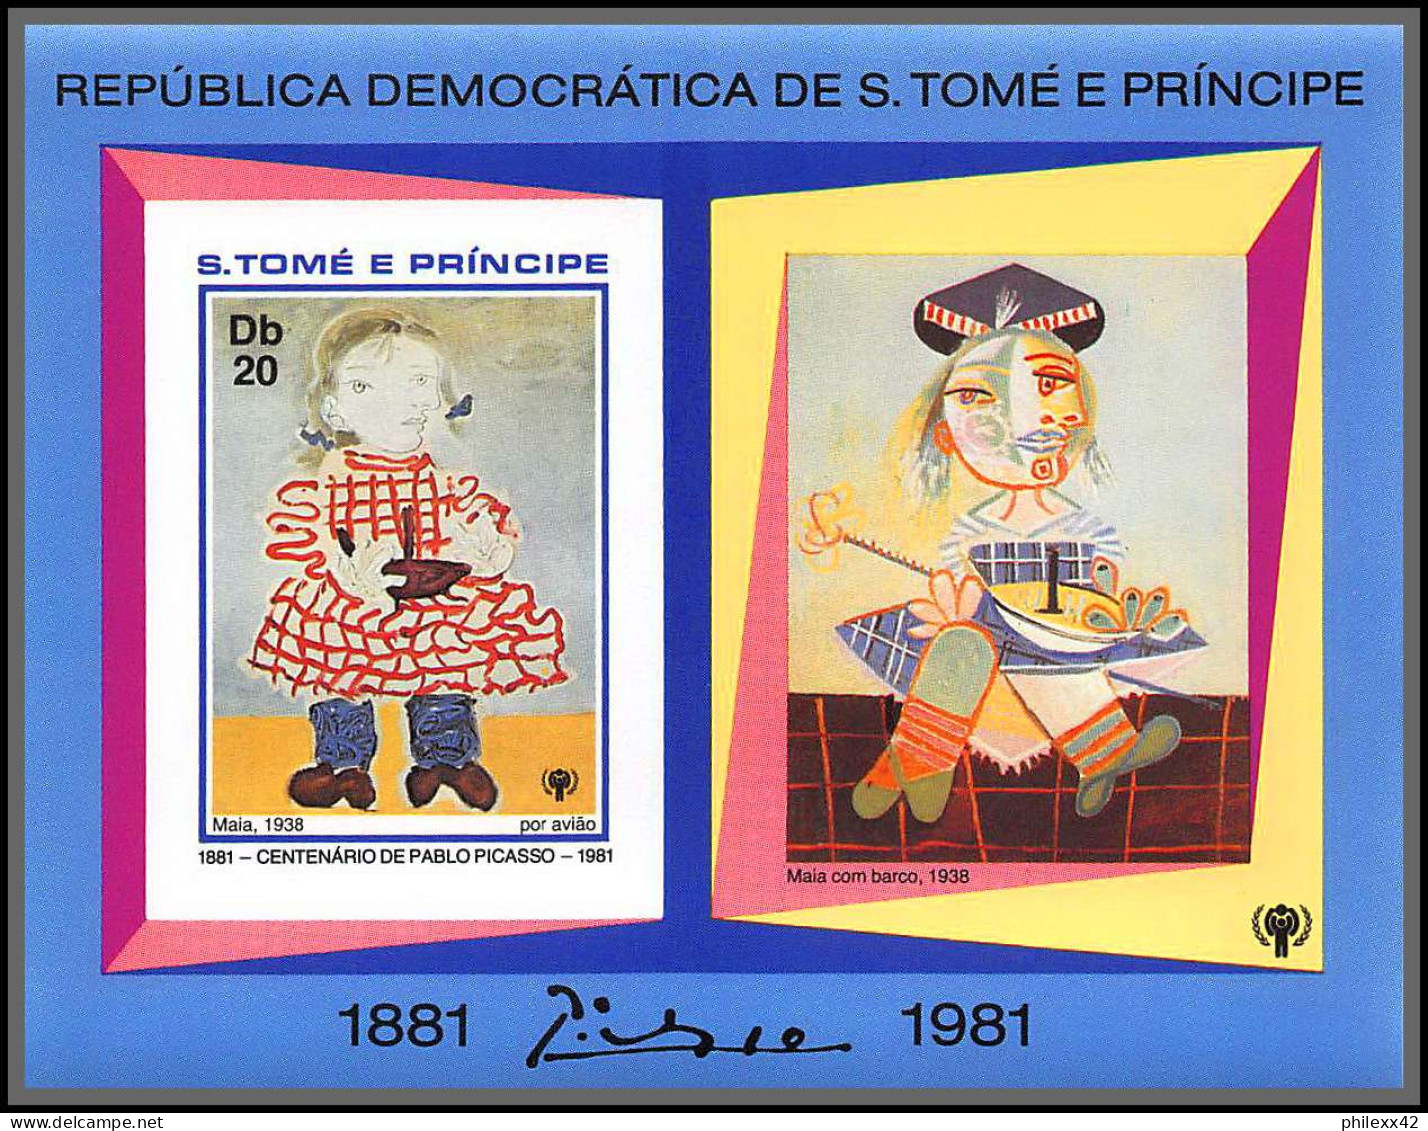 86361 Sao Tome e Principe 1981 Blocs 70/75 B Mi 715/720 B picasso Tableau (Painting) Non dentelé imperf ** MNH cote 80